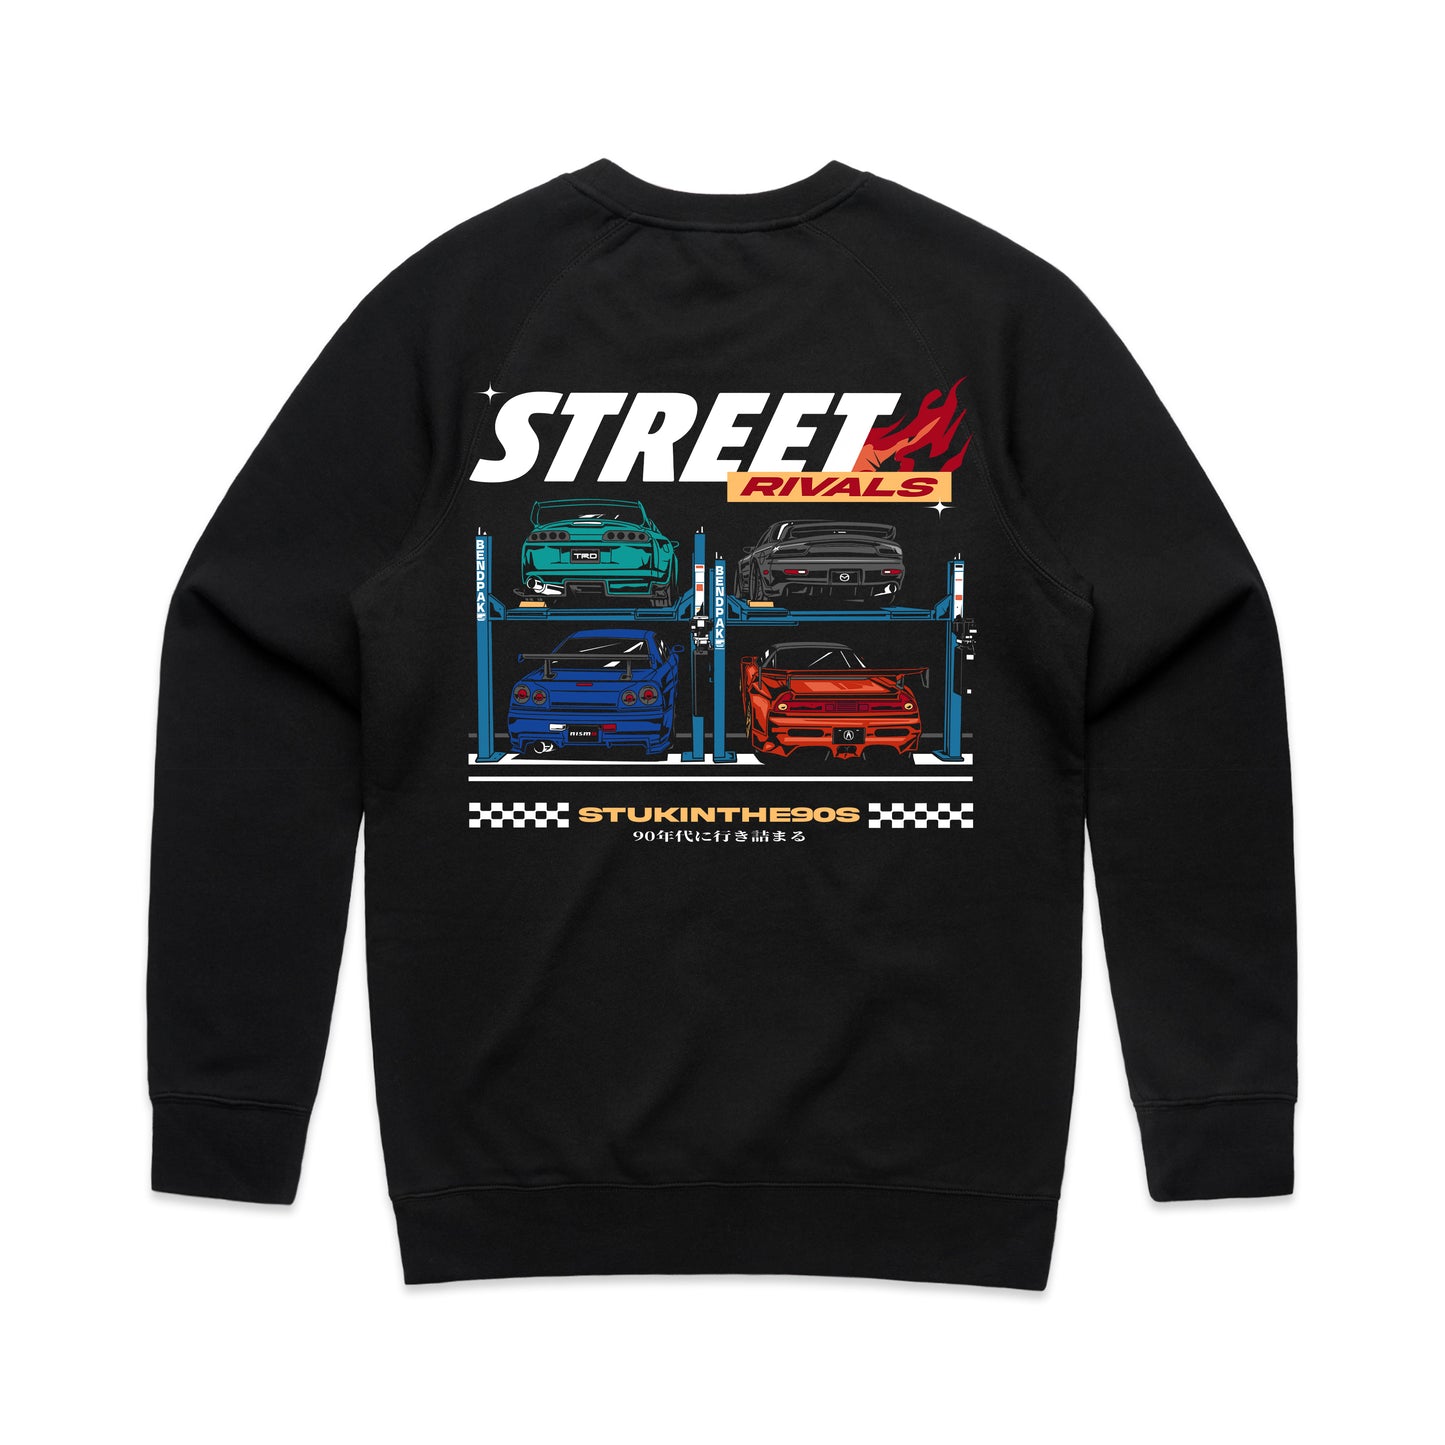 Stukinthe90s Collab Sweater